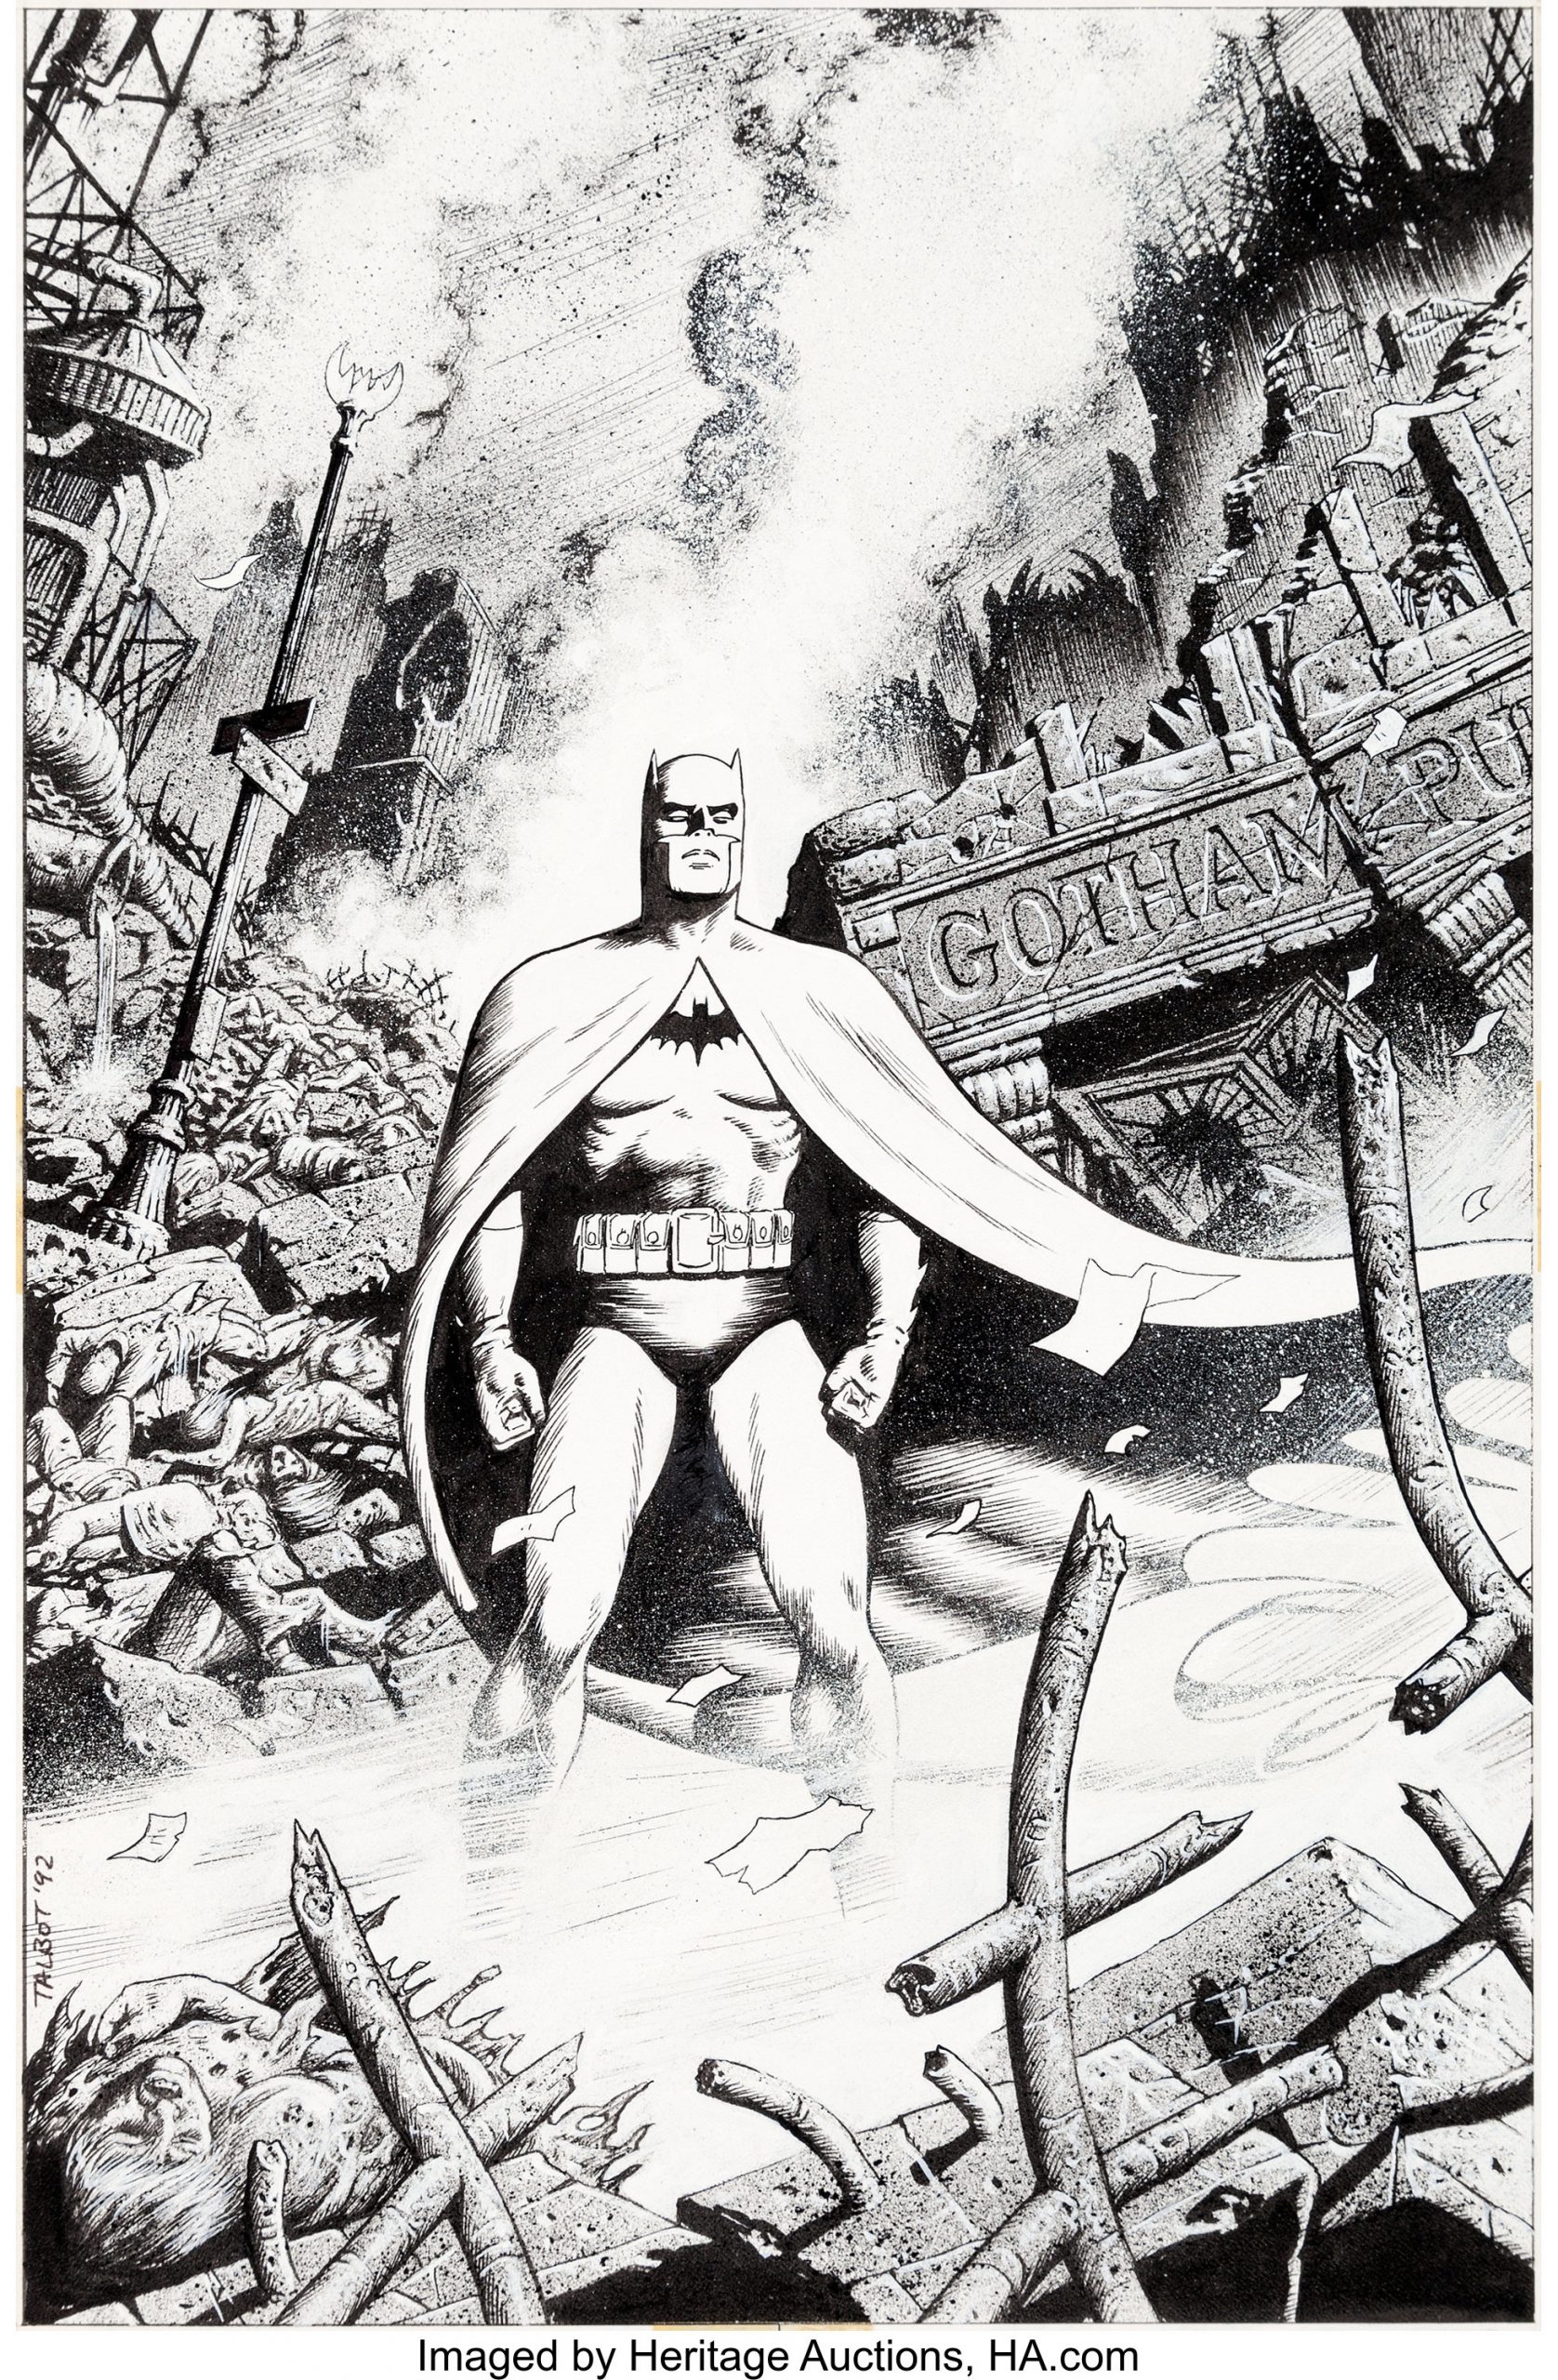 Batman: Legends of the Dark Knight #40 - cover art by Bryan Talbot